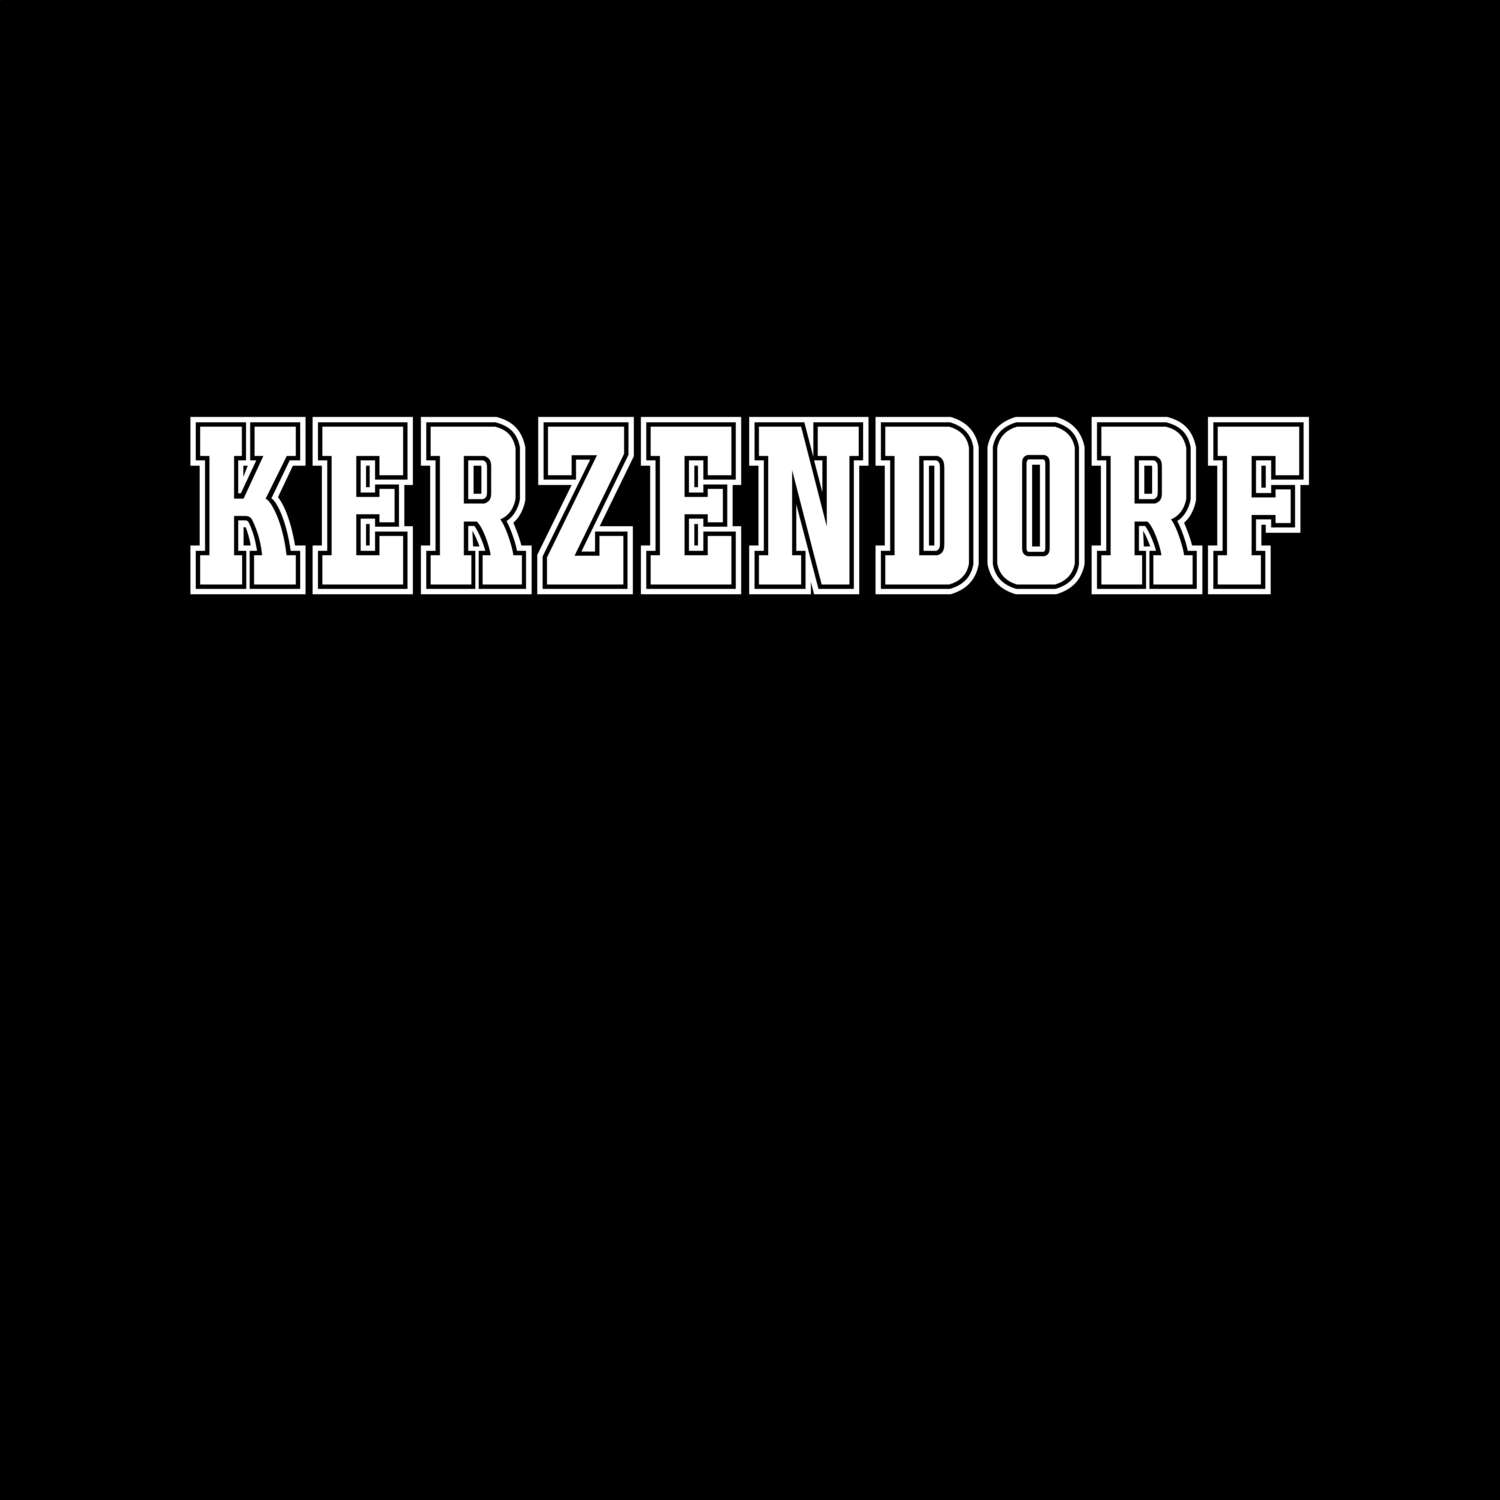 Kerzendorf T-Shirt »Classic«